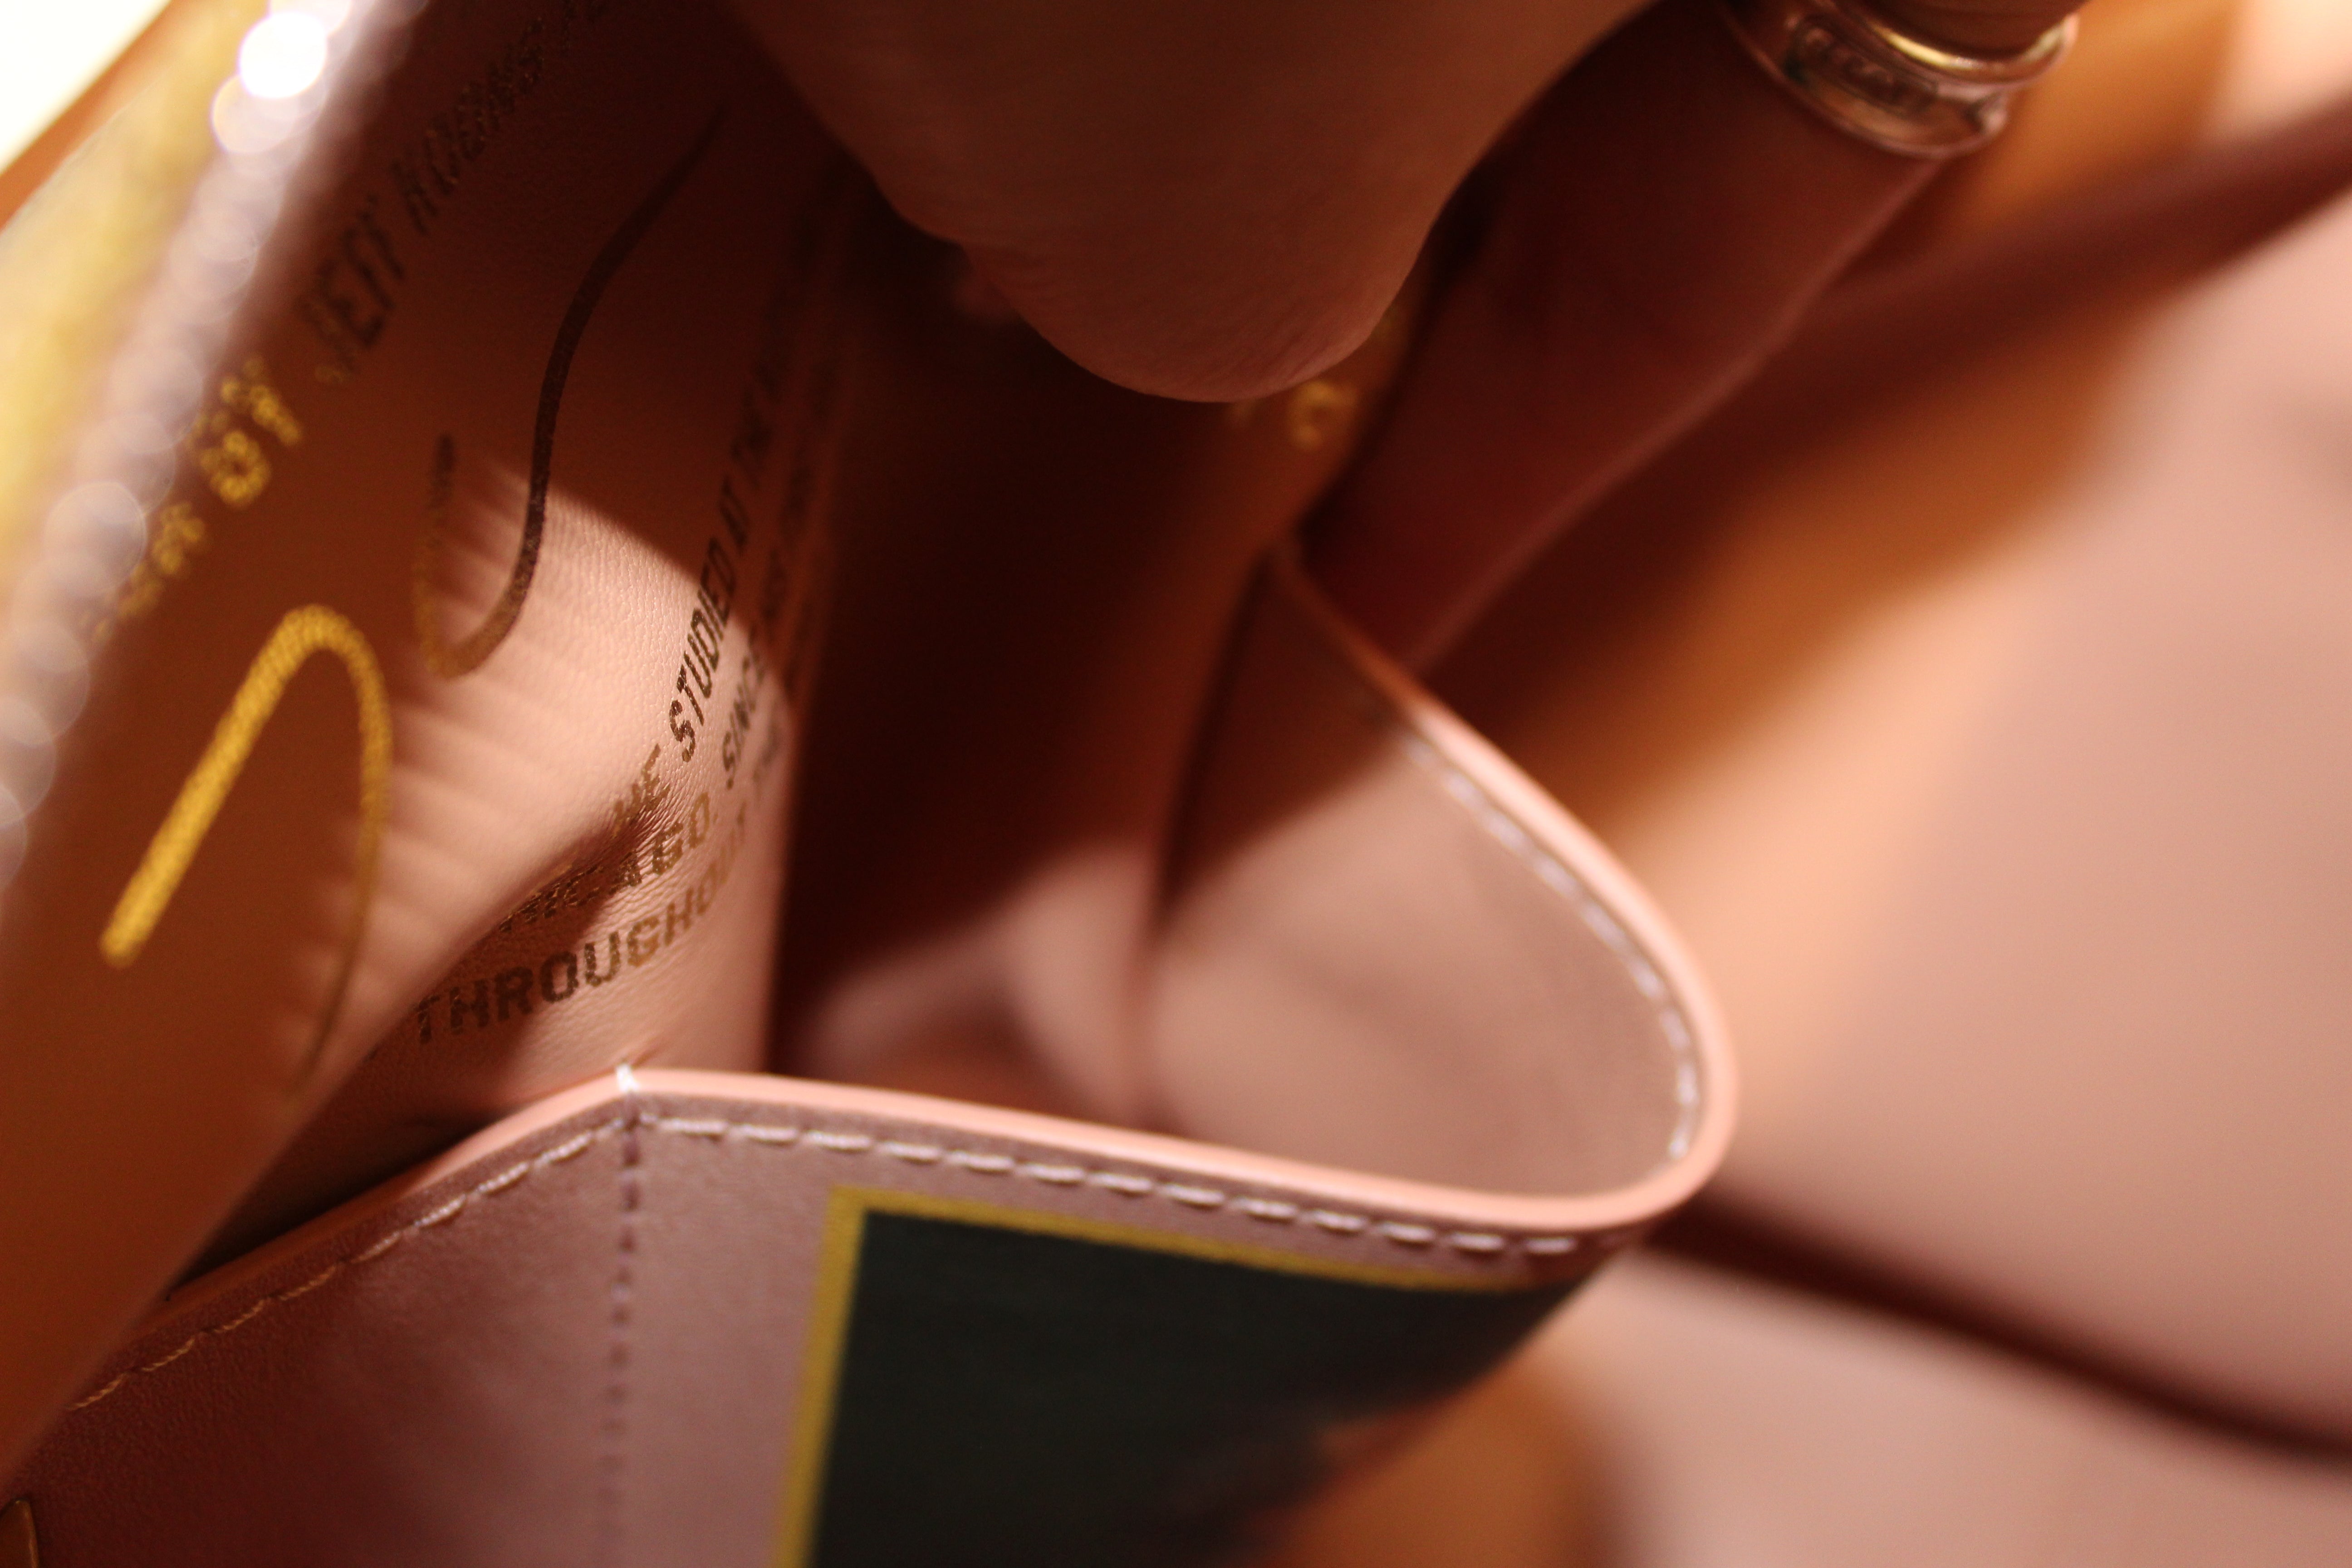 Louis Vuitton Limited Edition Masters Speedy 30 Jeff Koons Fragonard Bag